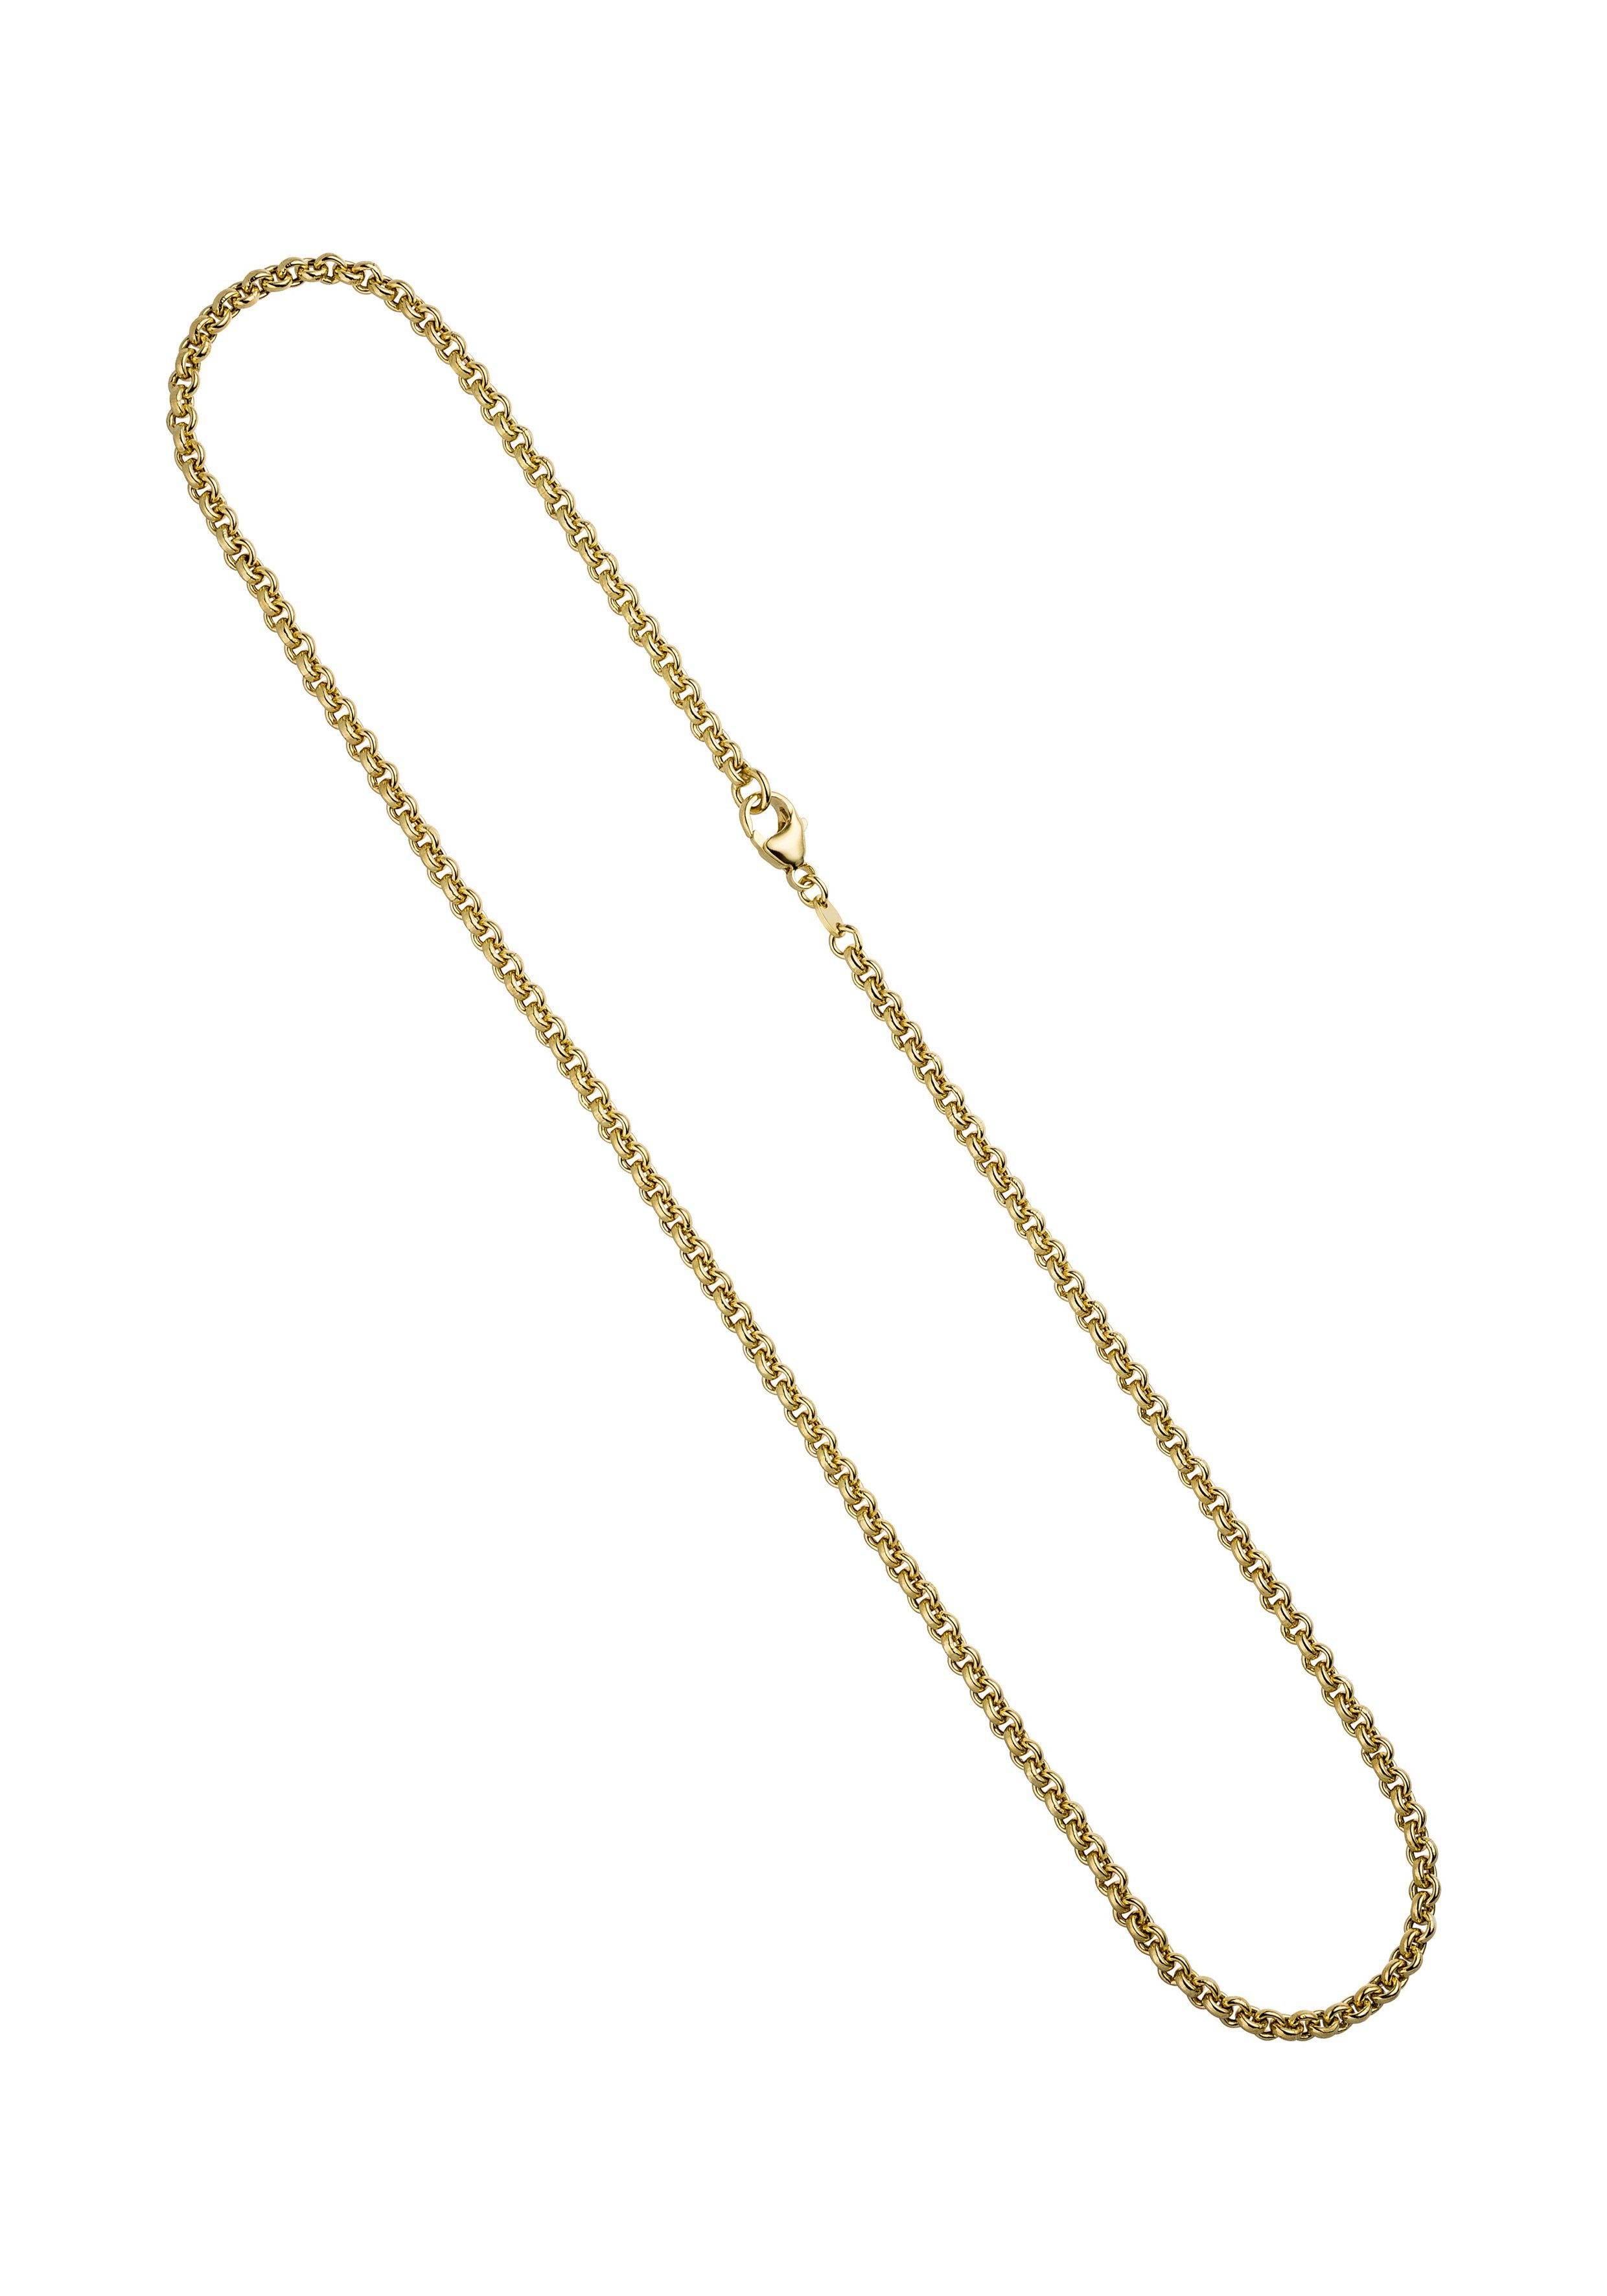 JOBO Goldkette »Erbs-Kette«, 585 Gold 80 cm kaufen | OTTO